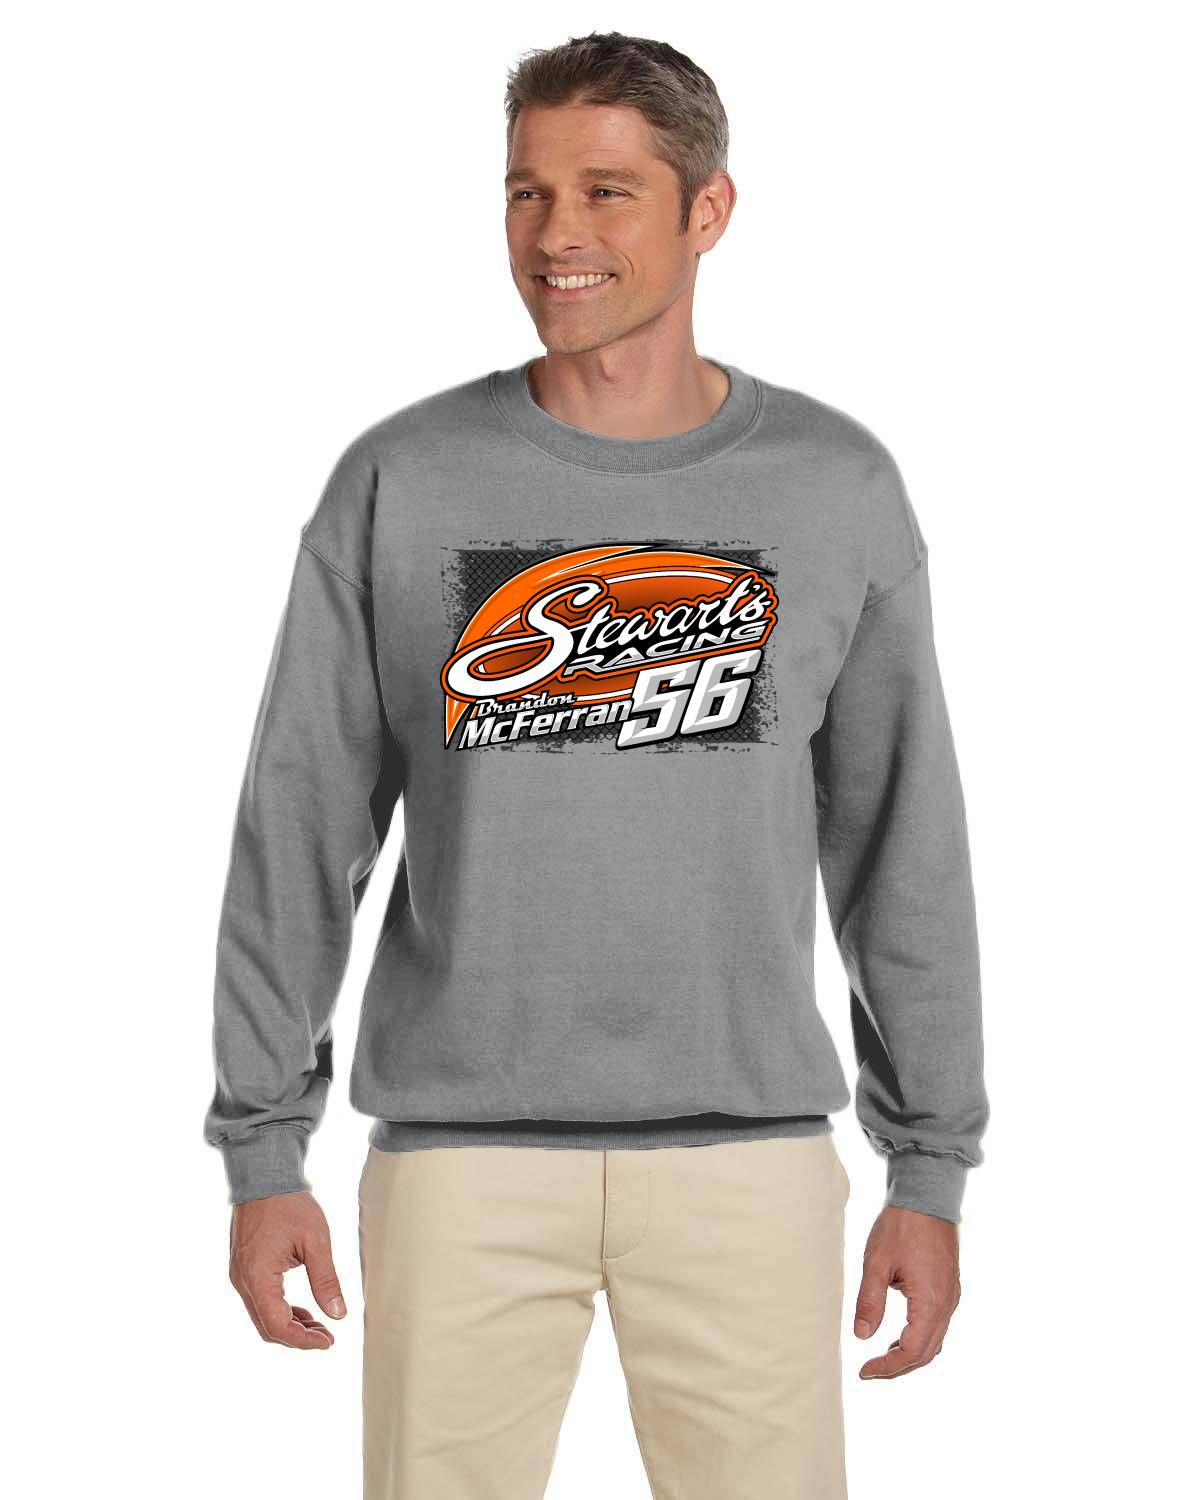 Stewart's Racing Brandon McFerran 56 Adult crew neck sweater